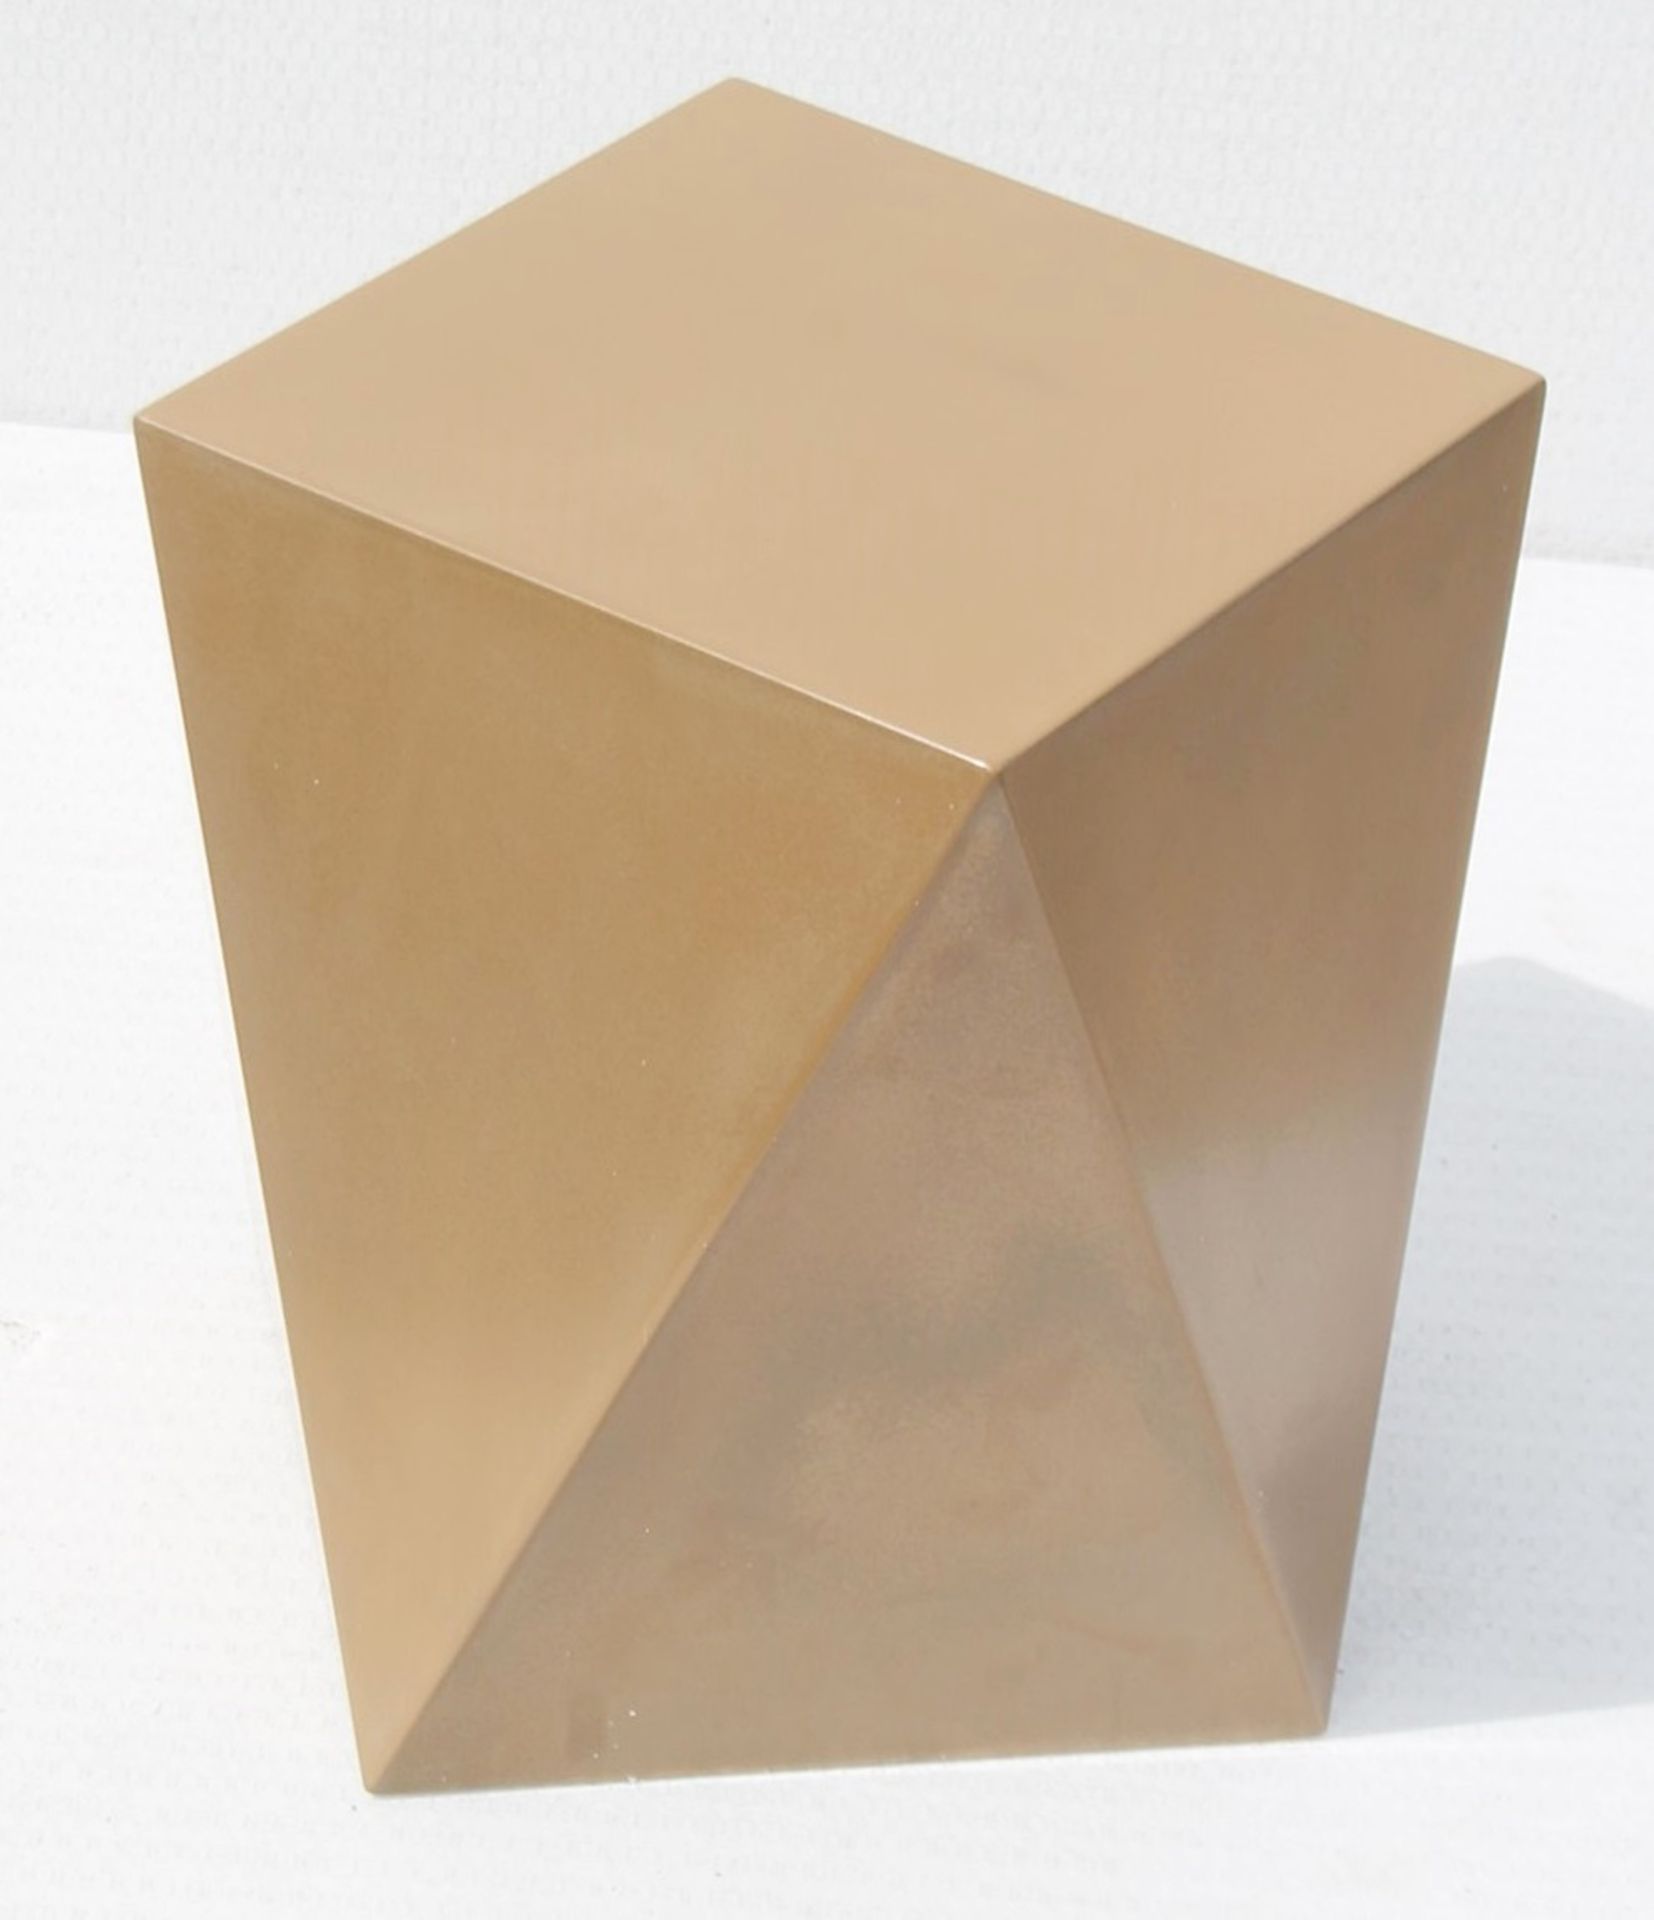 1 x LIGNE ROSET 'Rocher' Designer Folded Aluminium Side Table In Gold - Original Price £570.00